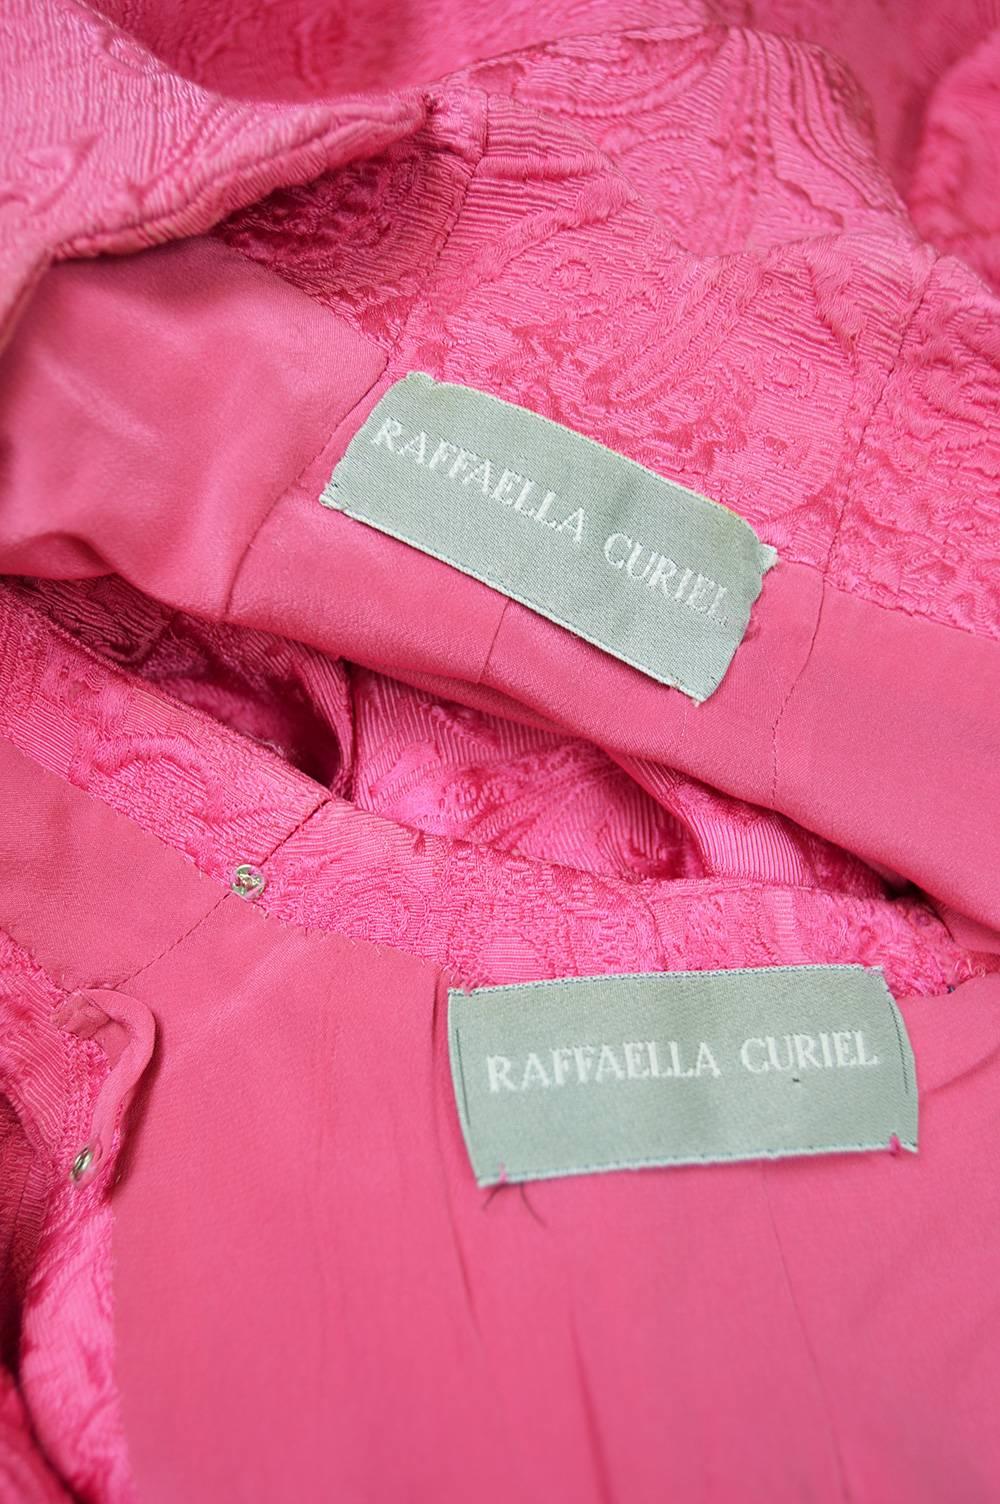 Raffaella Curiel Couture Vintage Pink Brocade Jacket and Dress Suit, 1990s 5